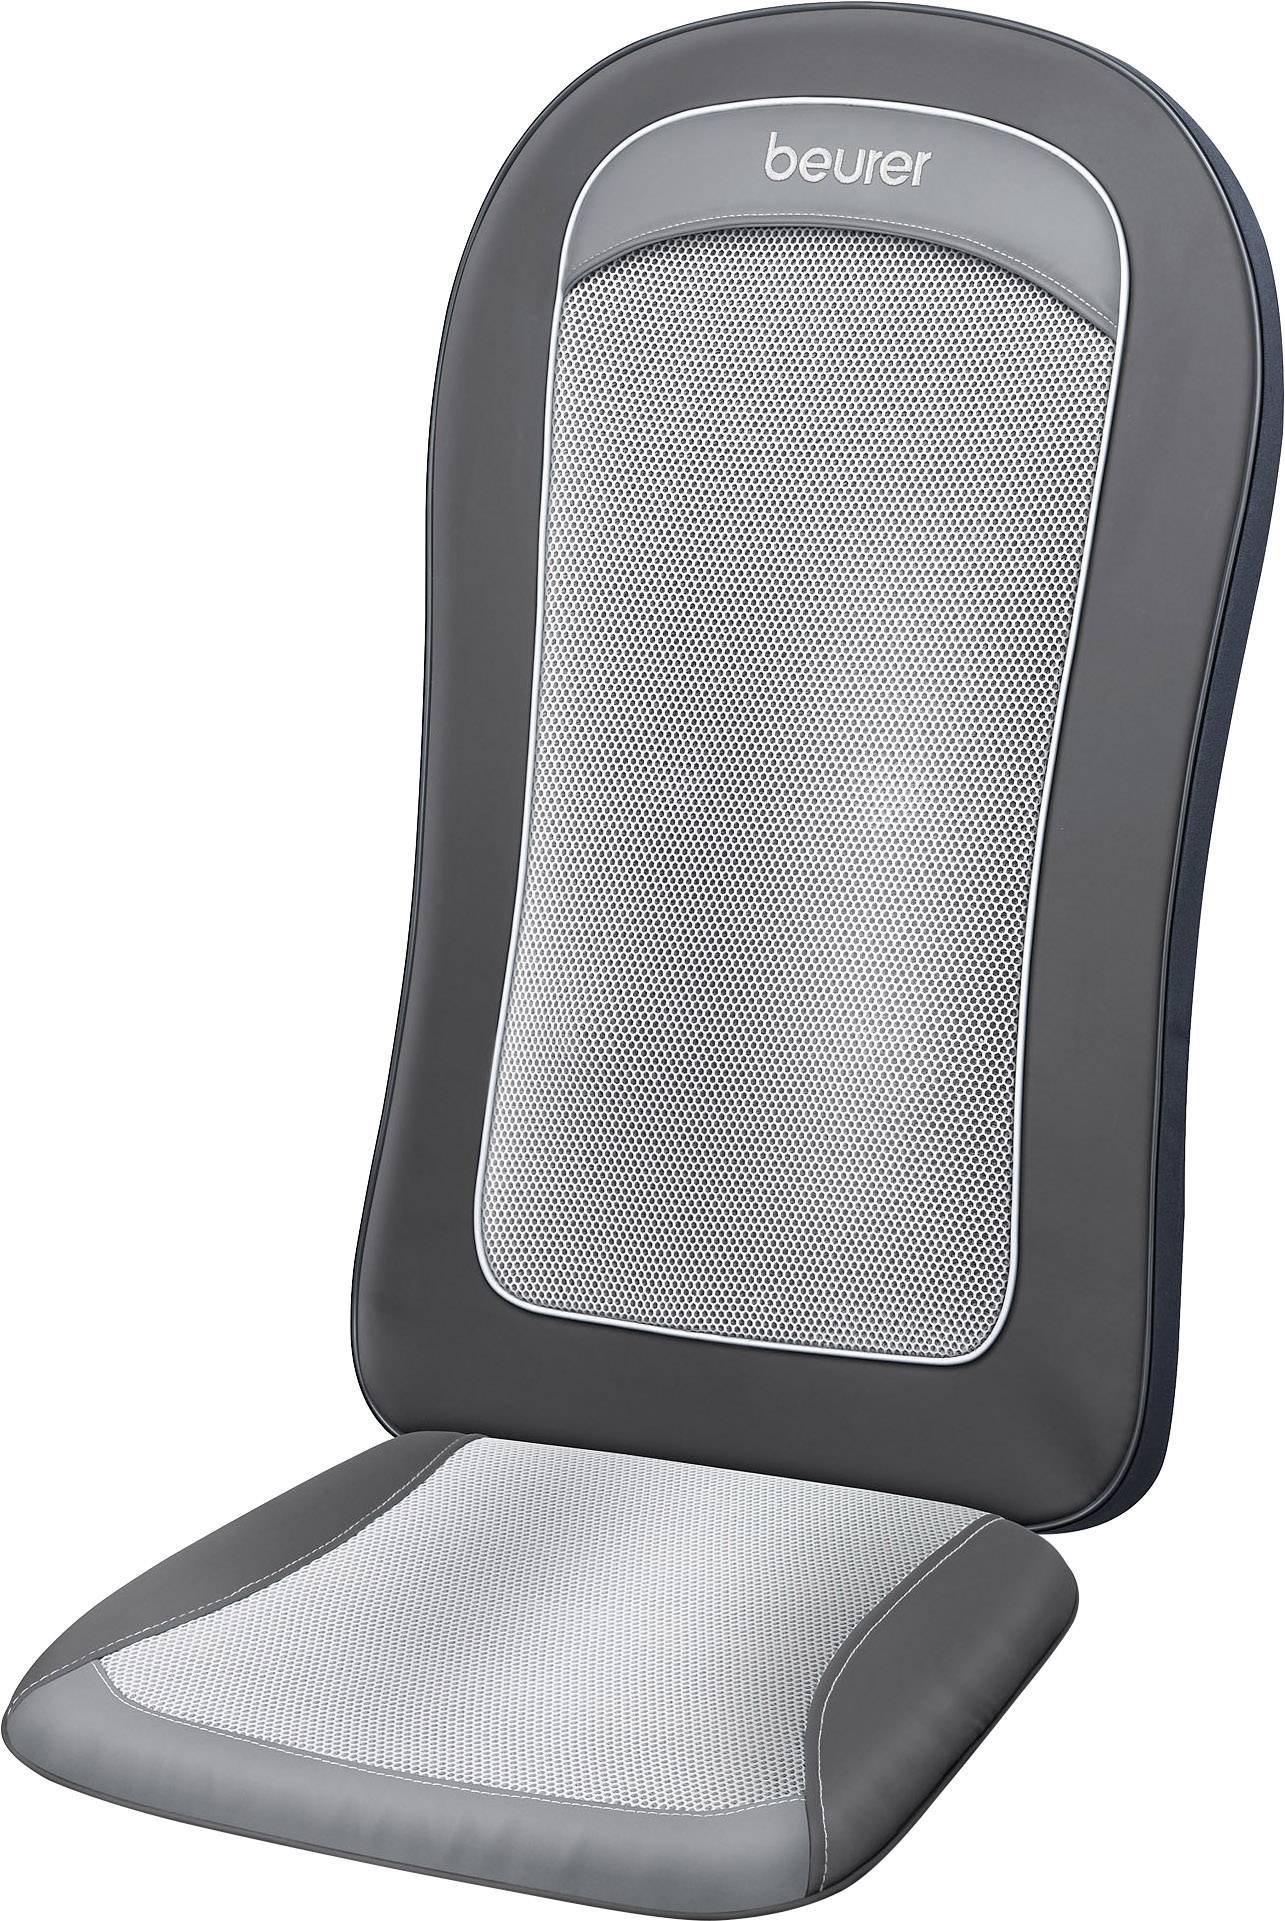 scherp Veronderstellen Tenslotte Beurer MG 206 Massage cushion 18 W Grey | Conrad.com